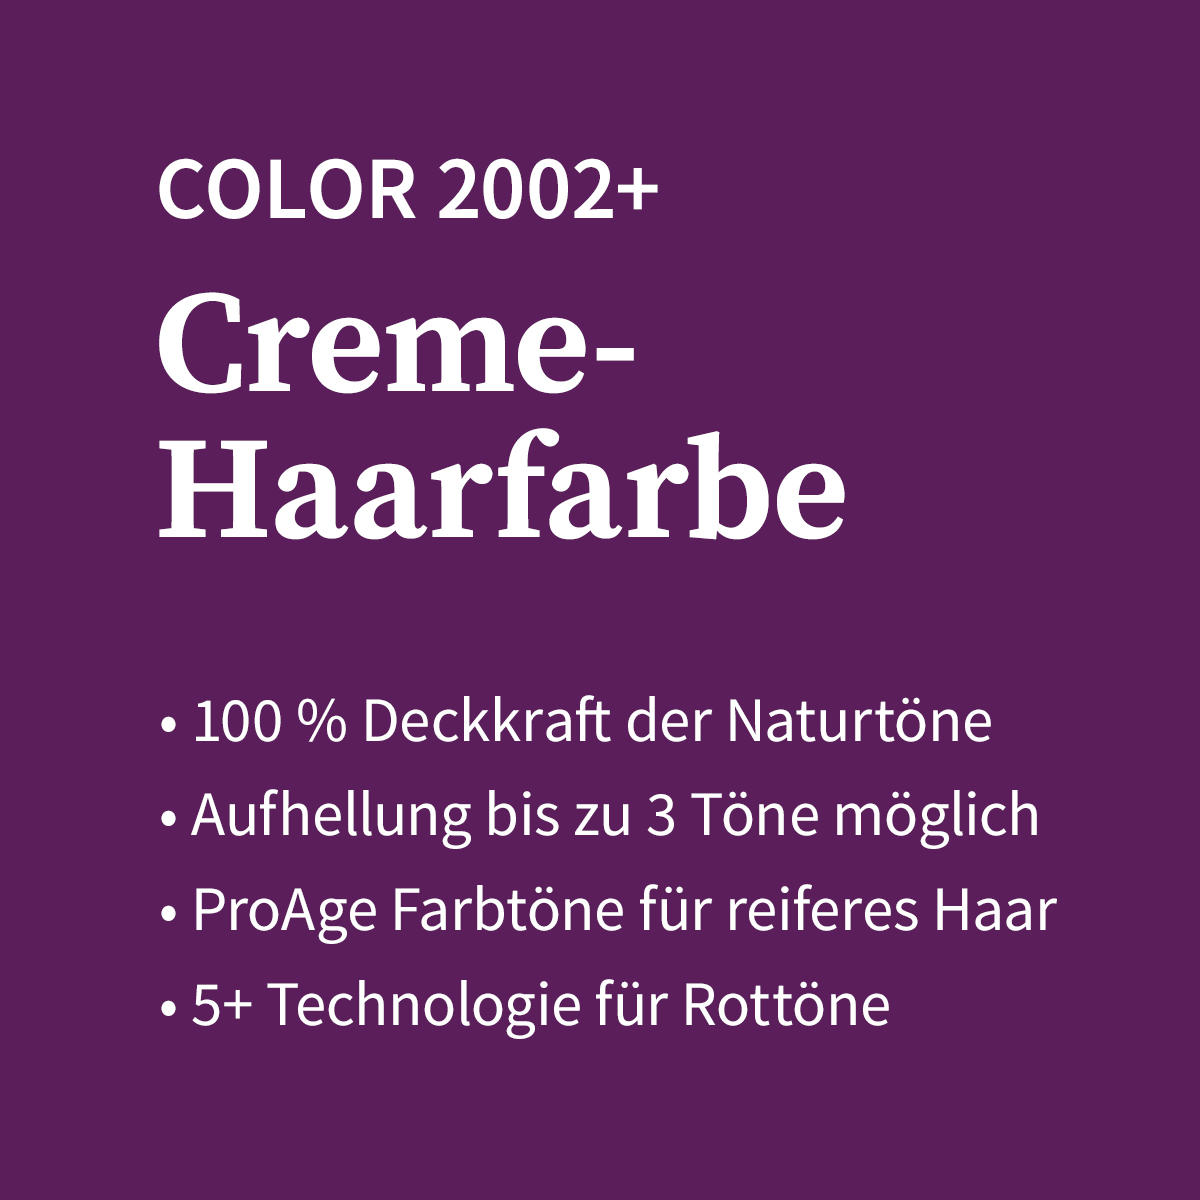 Basler Color 2002+ Cremehaarfarbe 4/6 mittelbraun violett, Tube 60 ml - 4